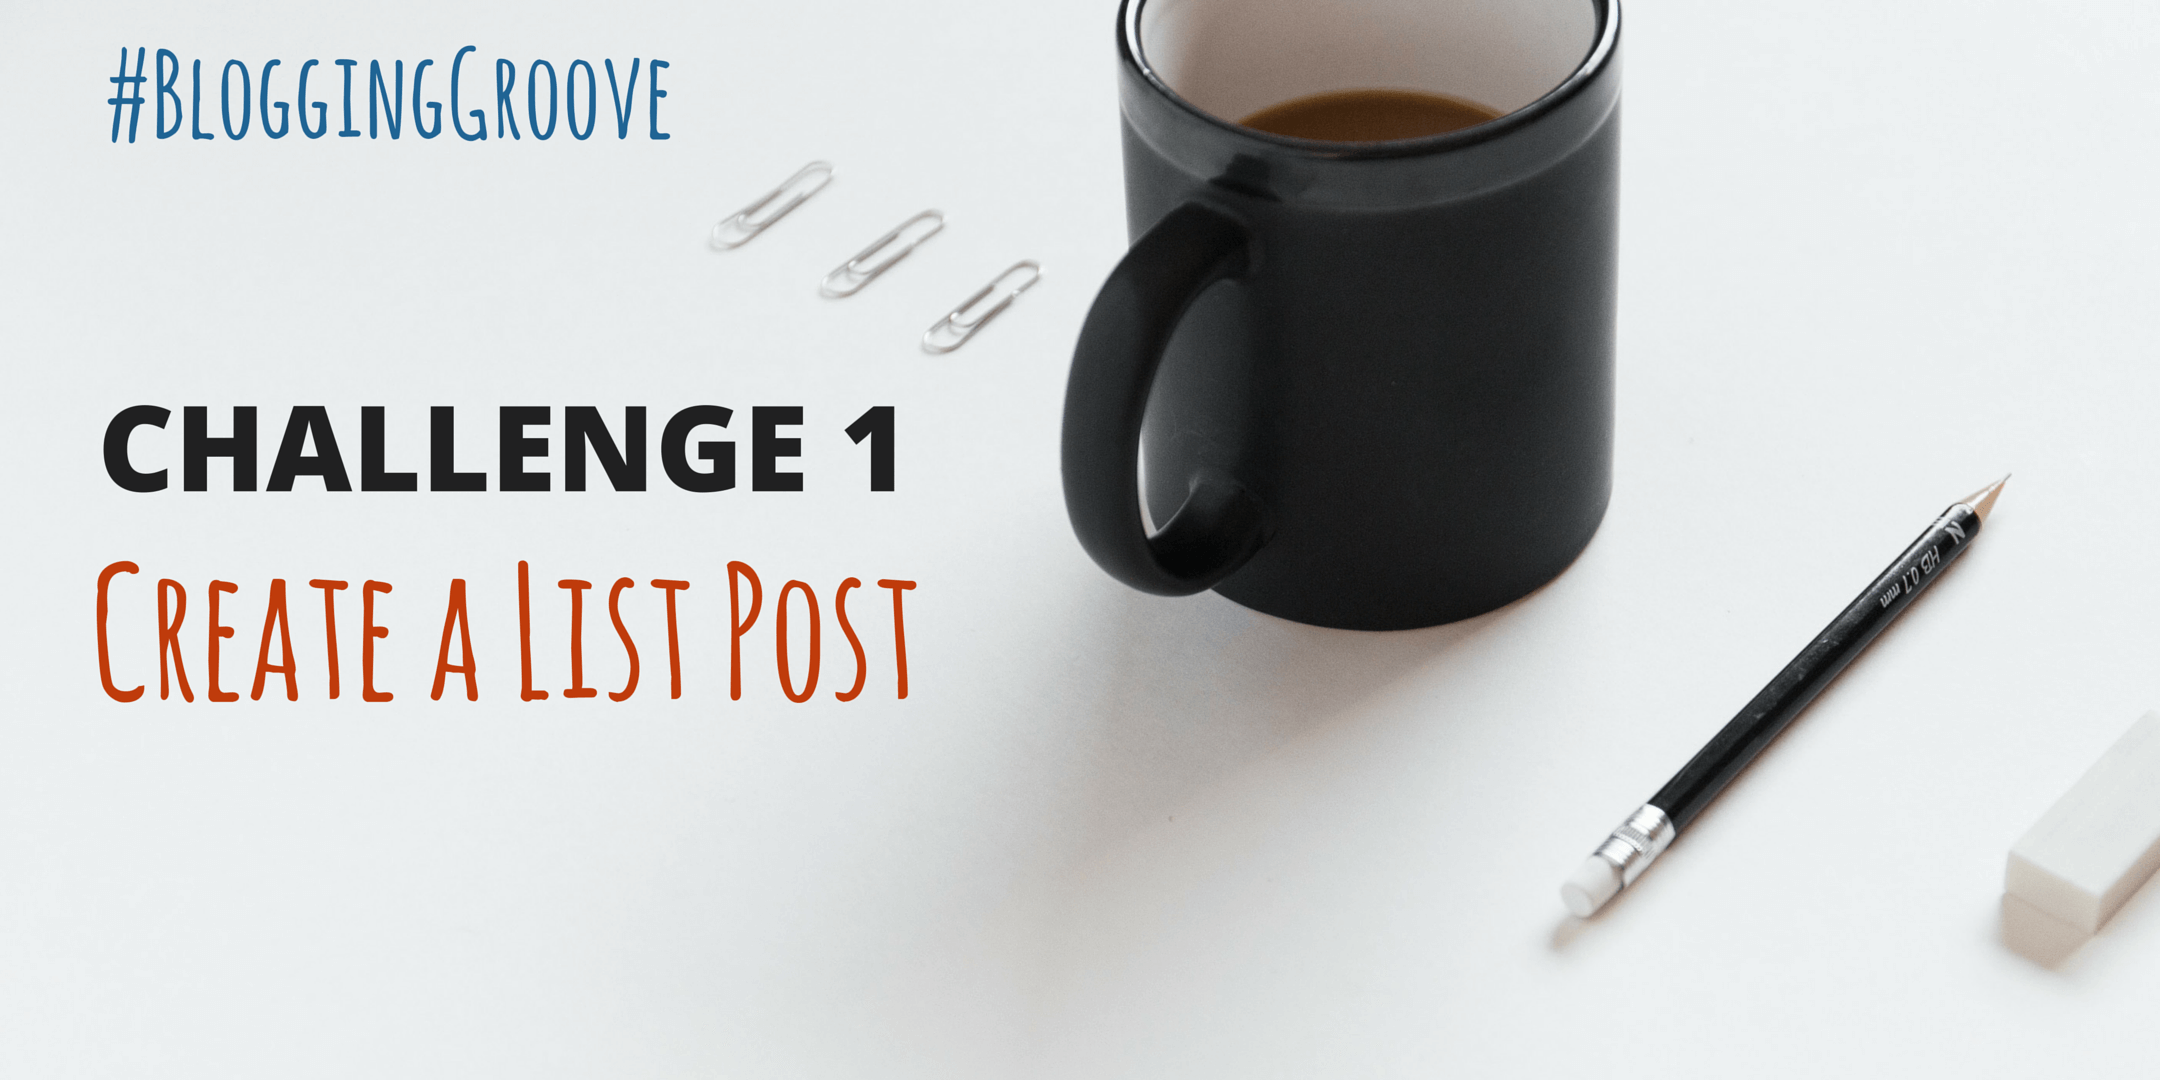 CHALLENGE 1 CREATE A LIST POST